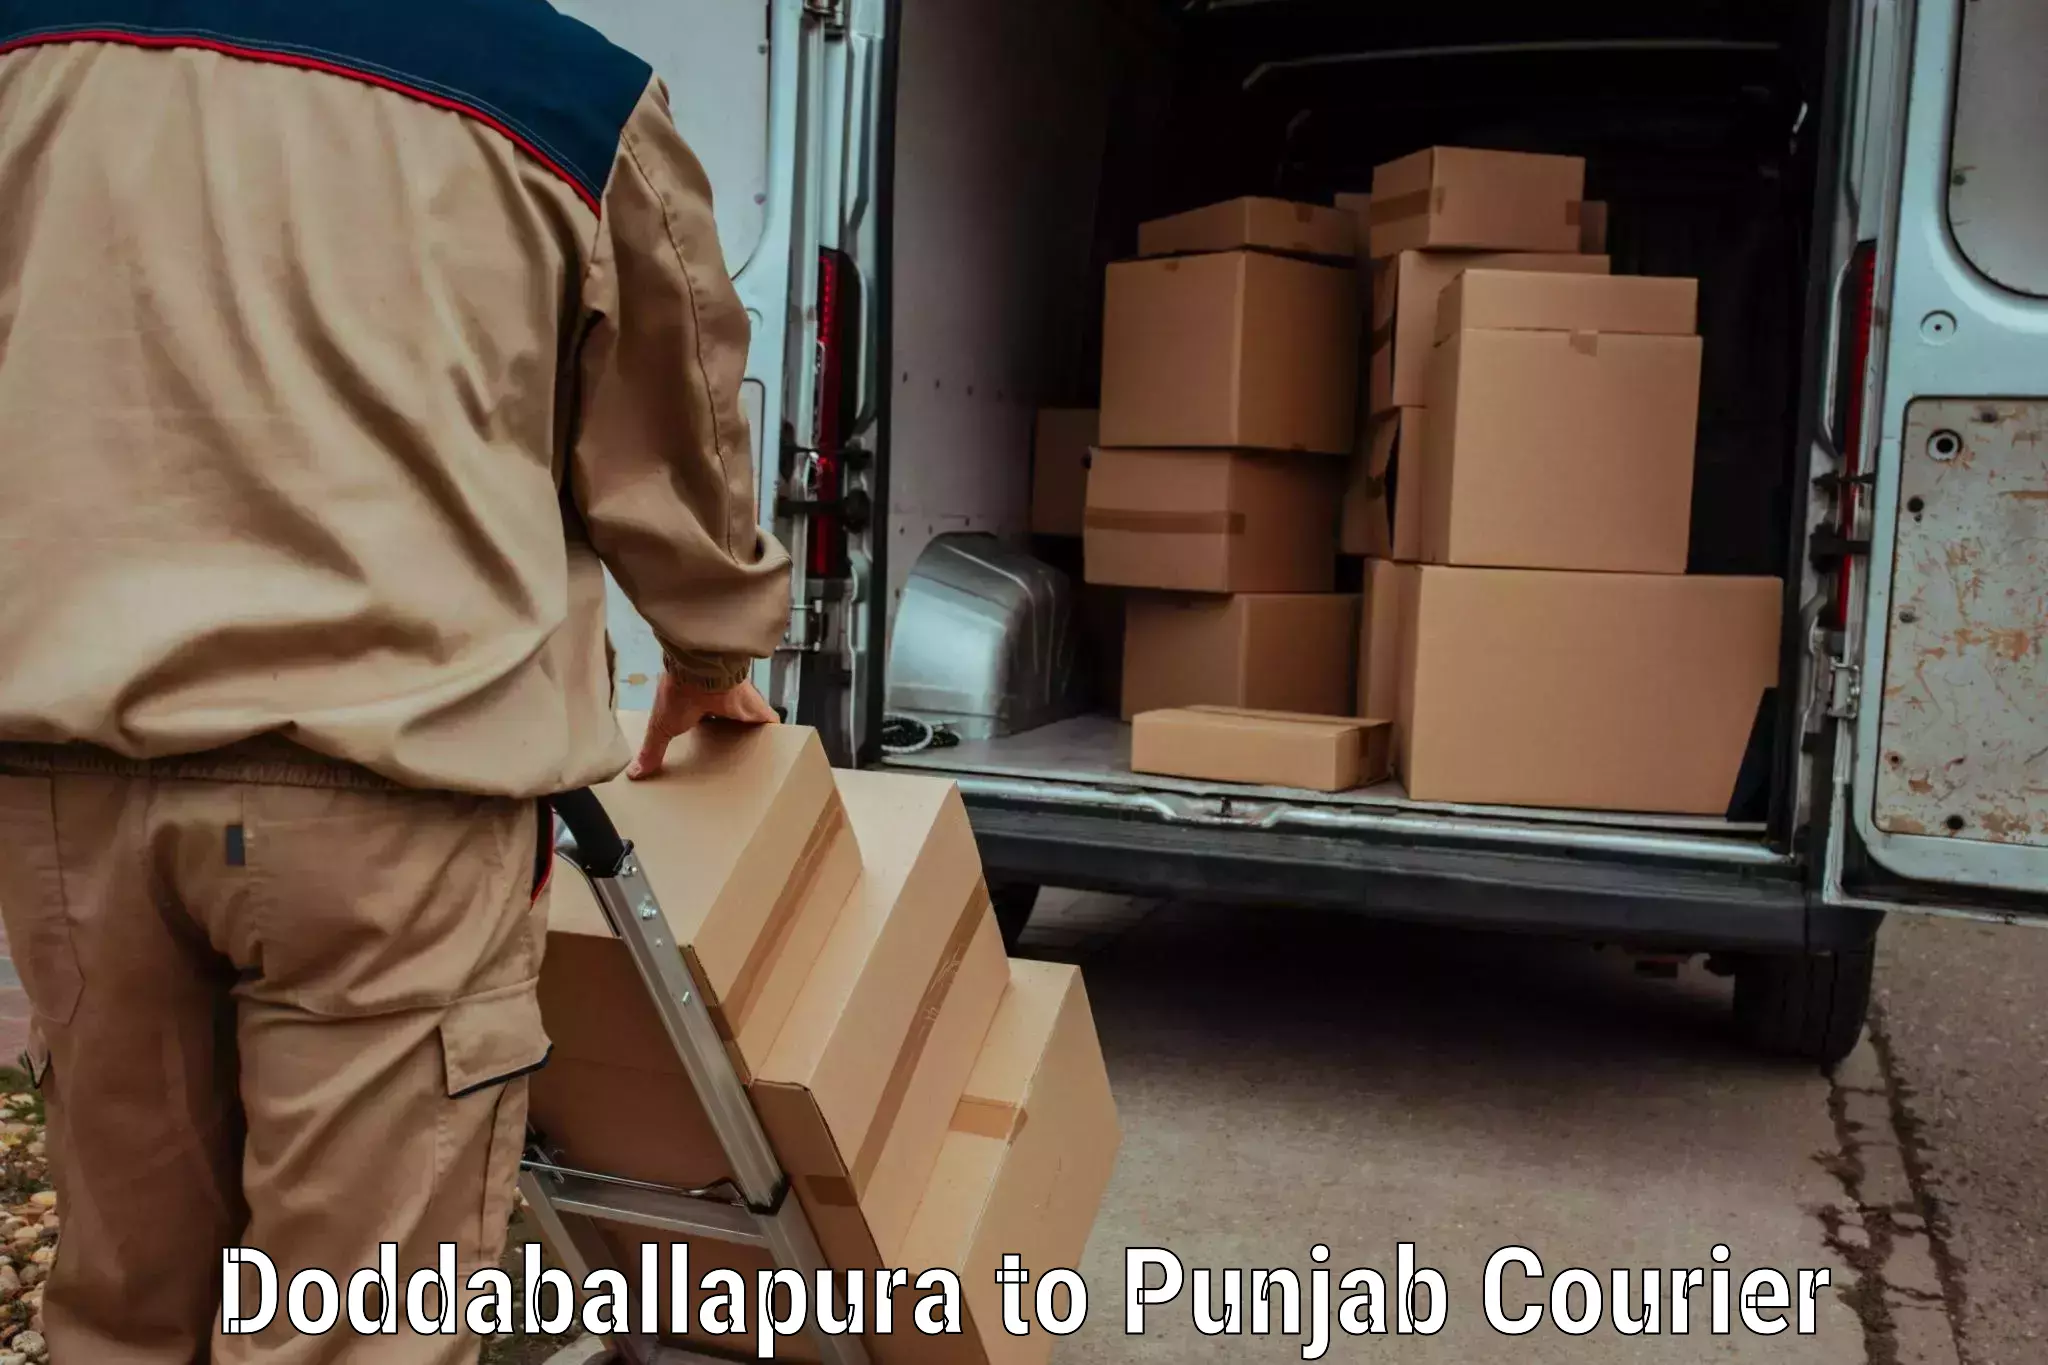 Advanced delivery network Doddaballapura to Dhilwan